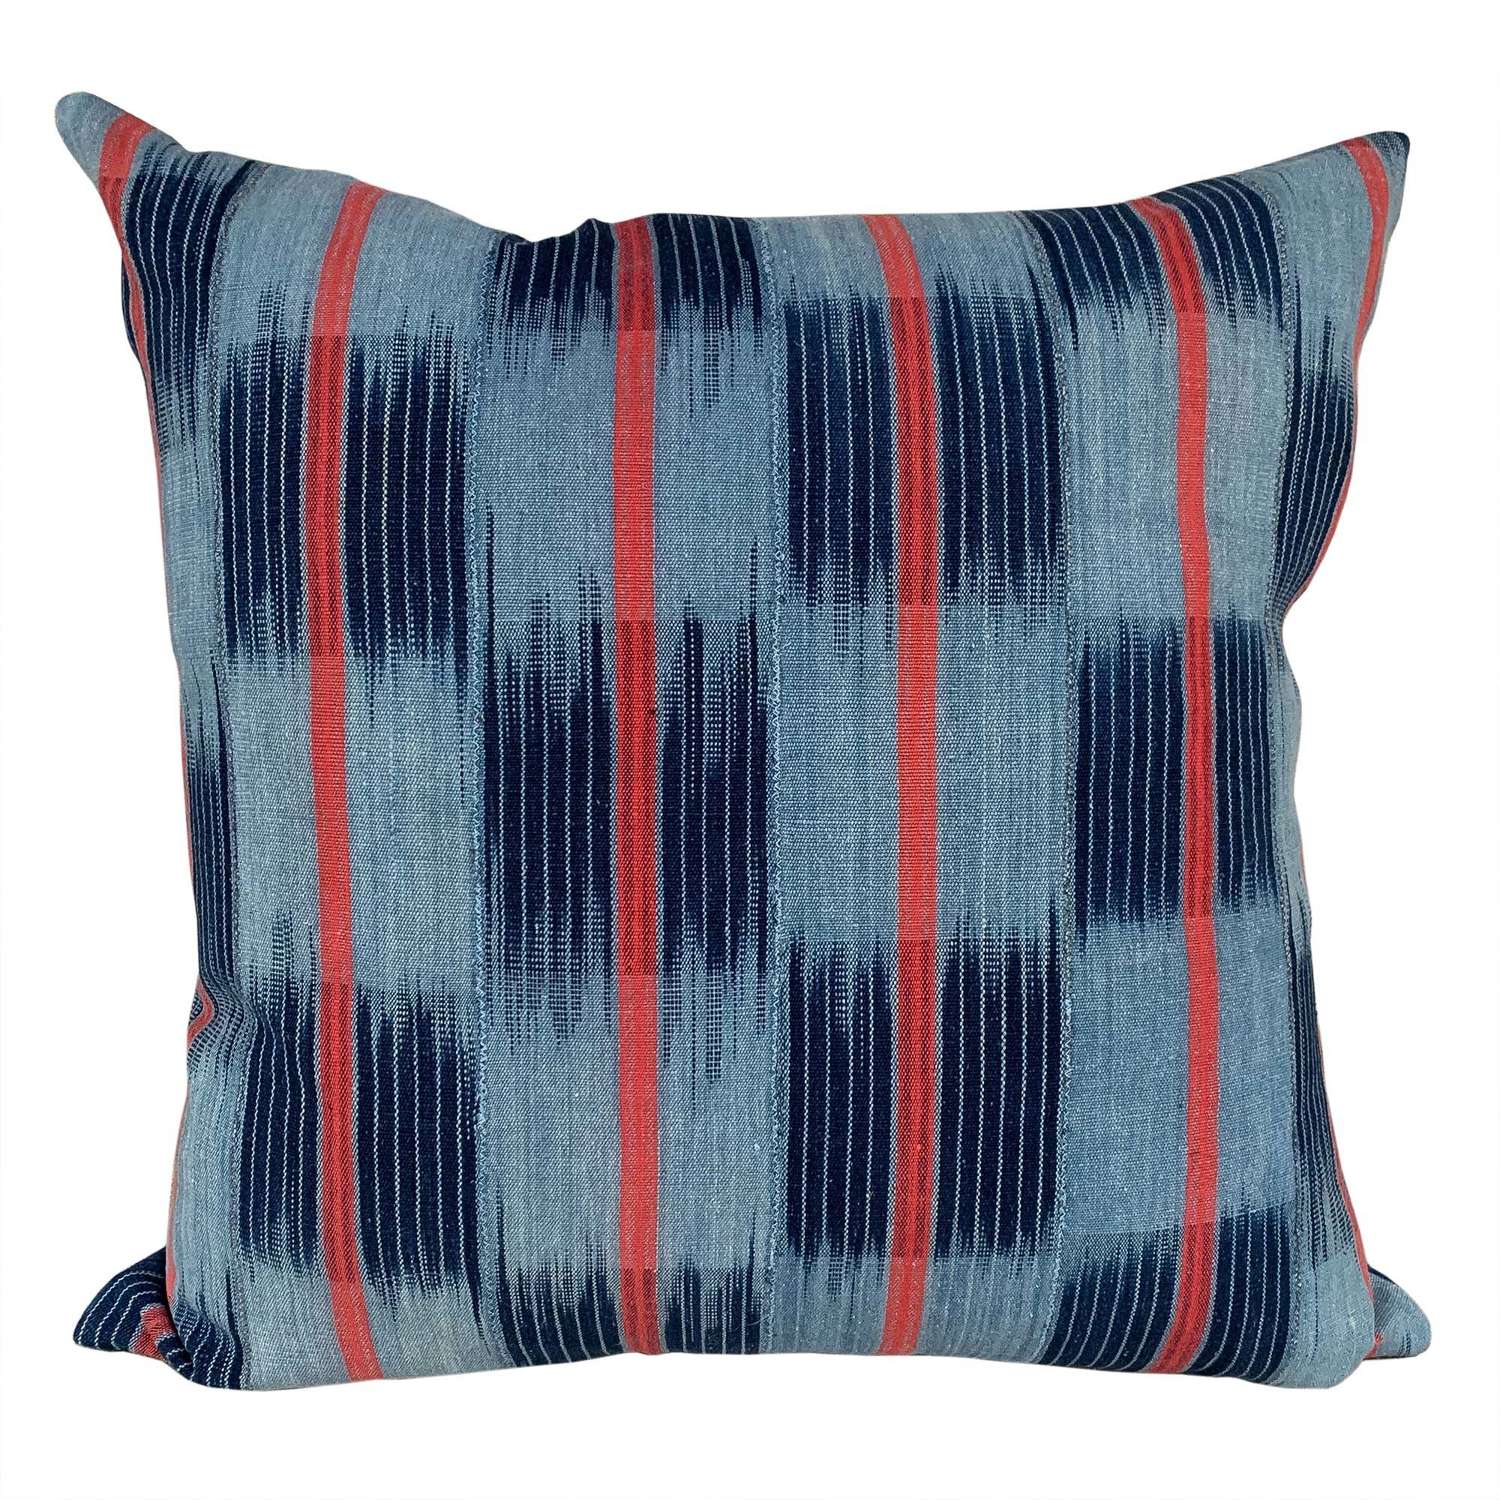 Indigo Dioula cushions